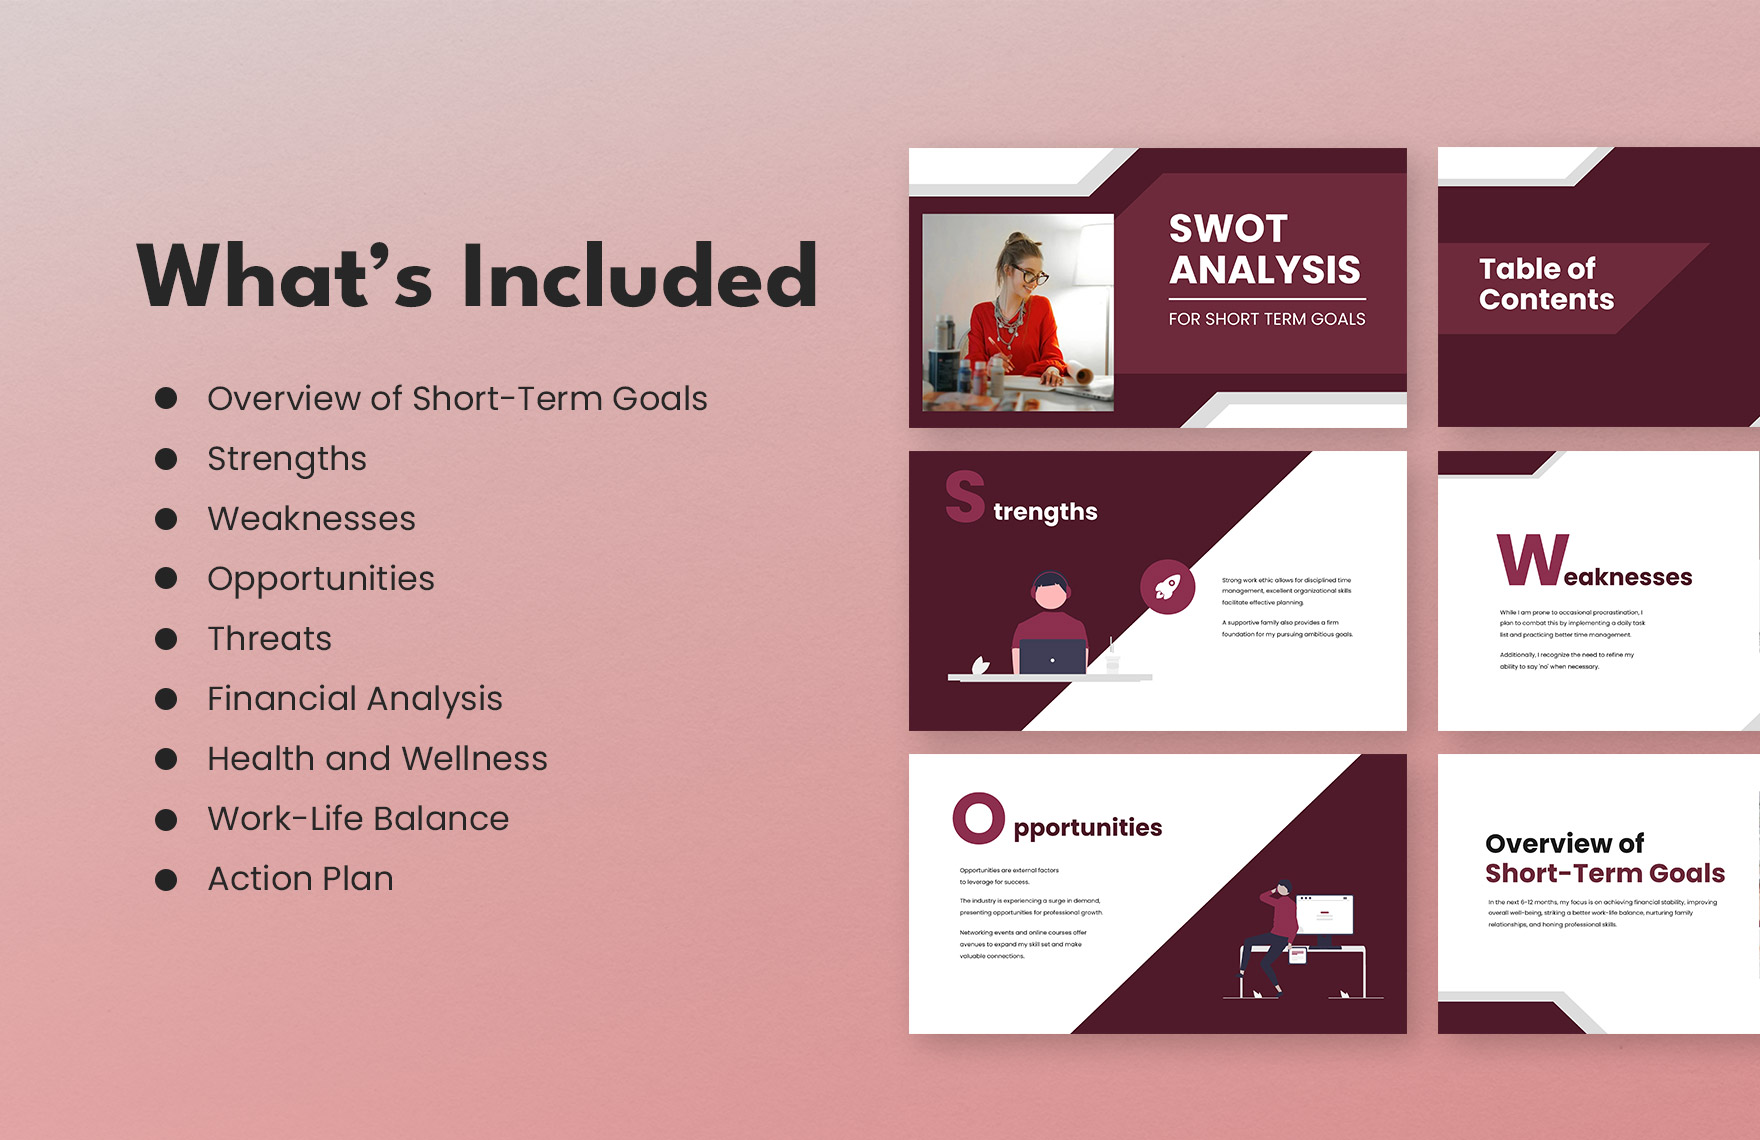 SWOT Analysis for Short Term Goals